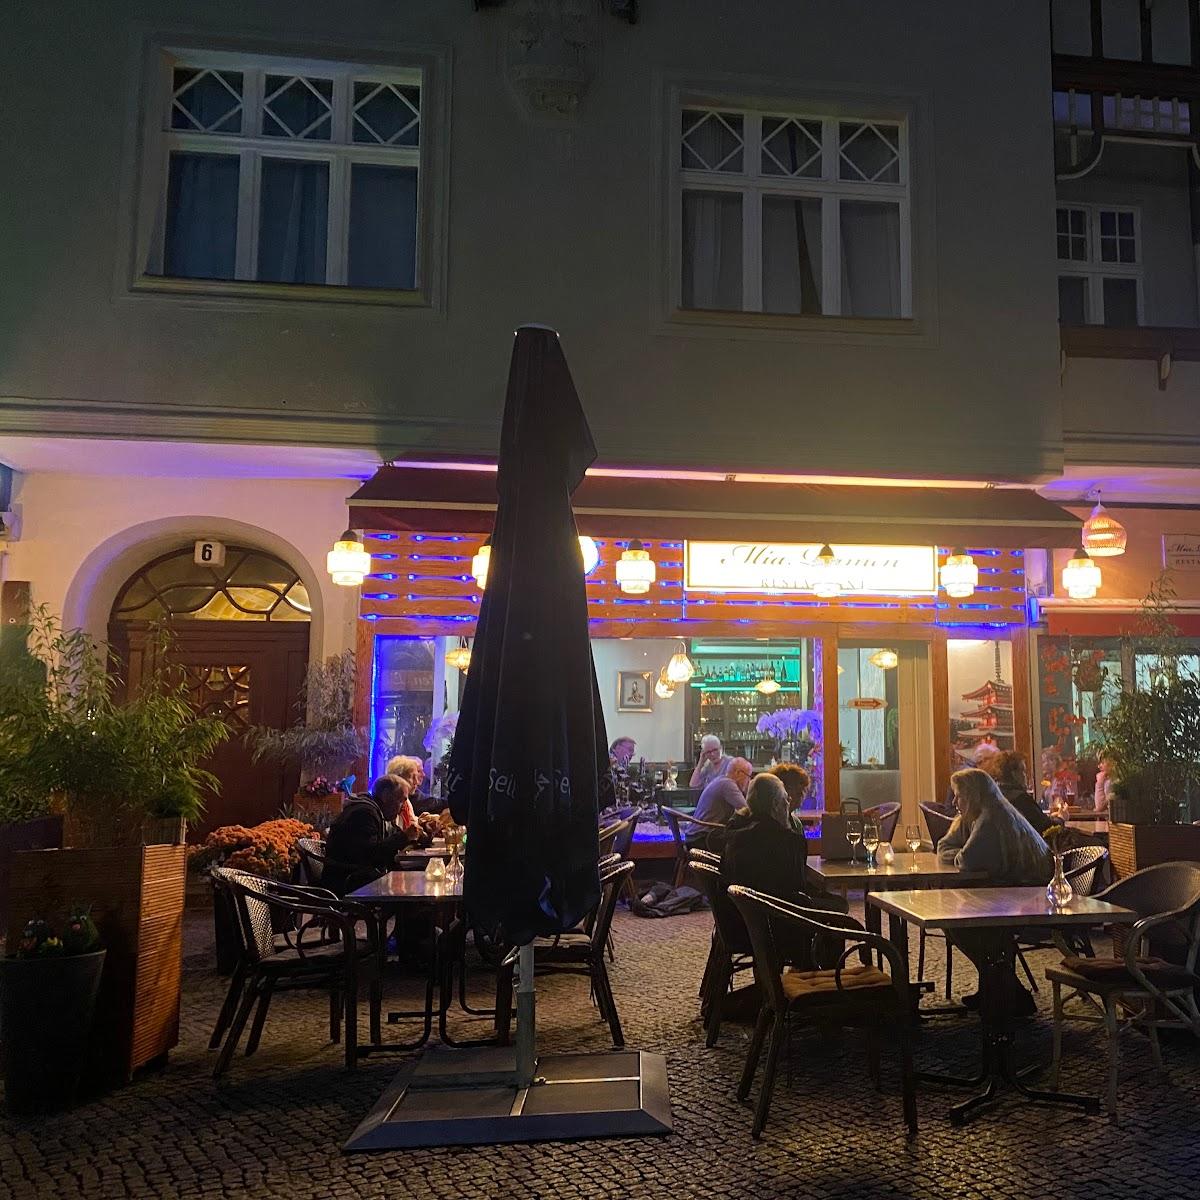 Restaurant "Mia Ramen" in Berlin